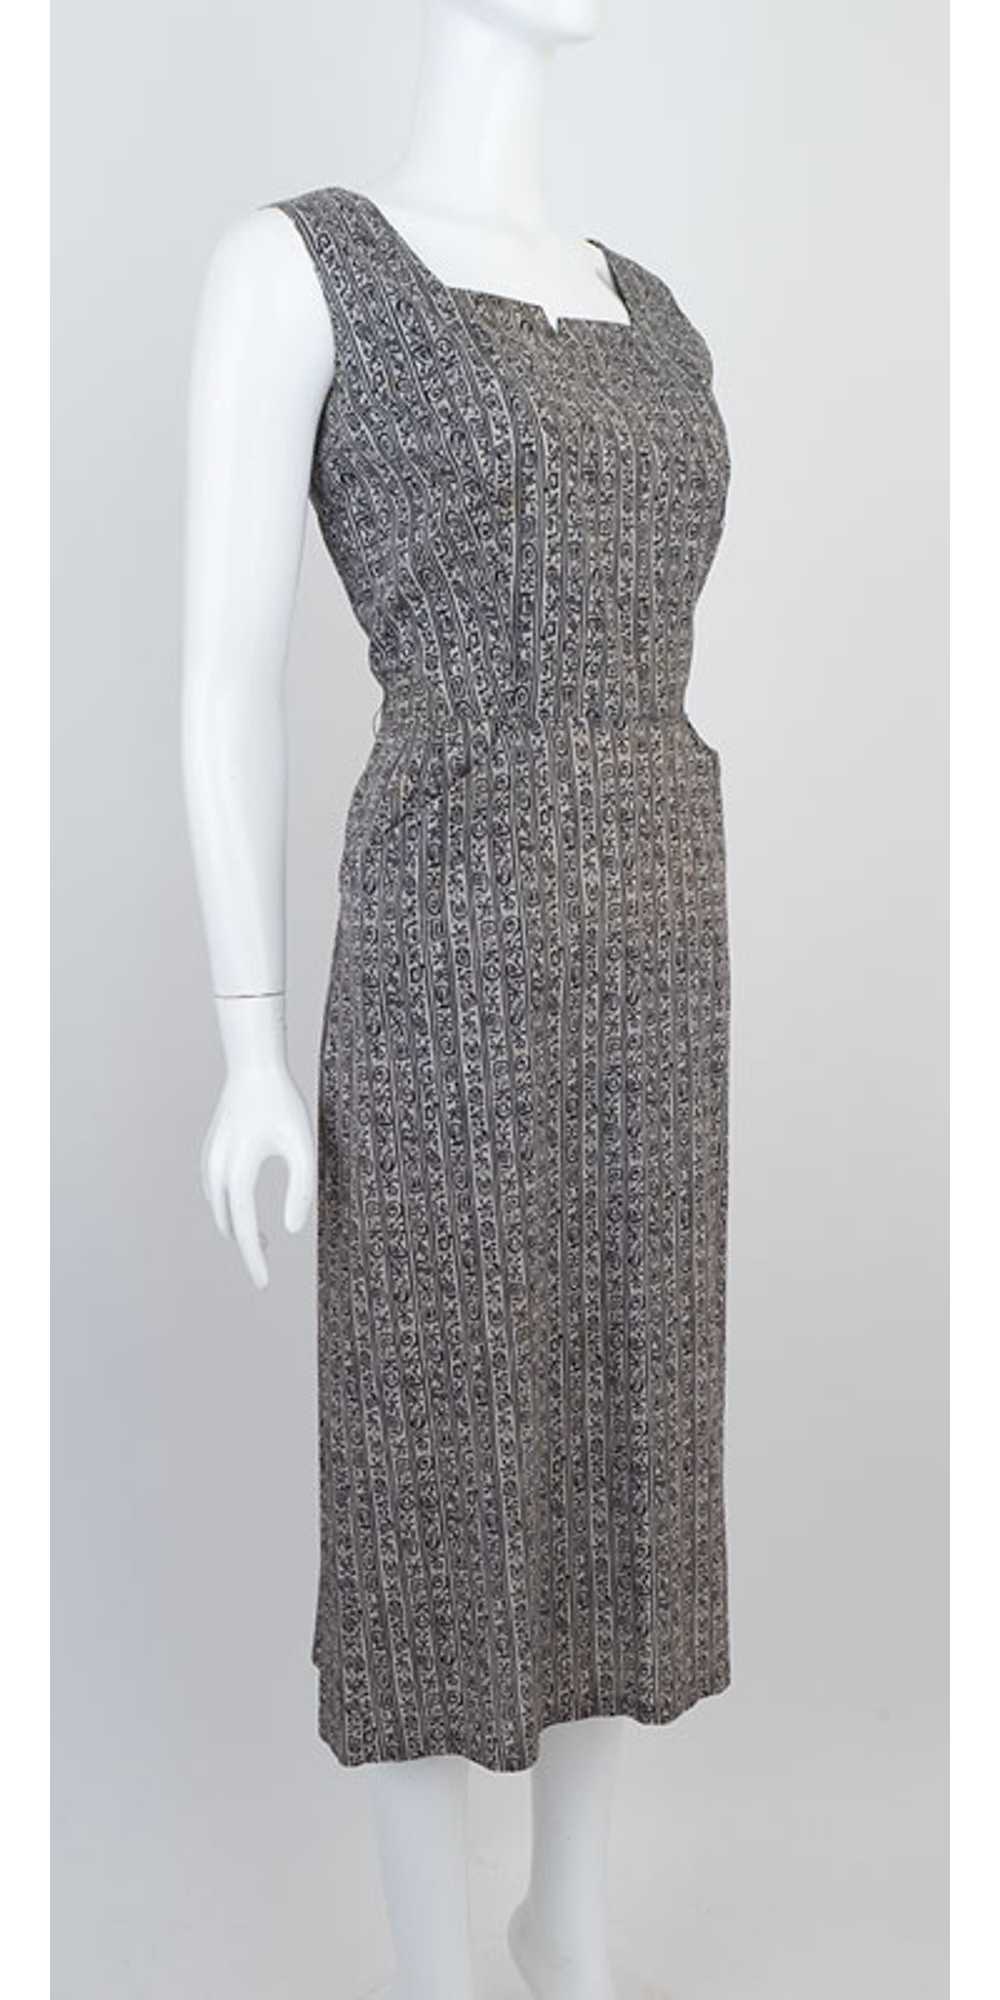 Fab 1950s Novelty Print Dress - image 4